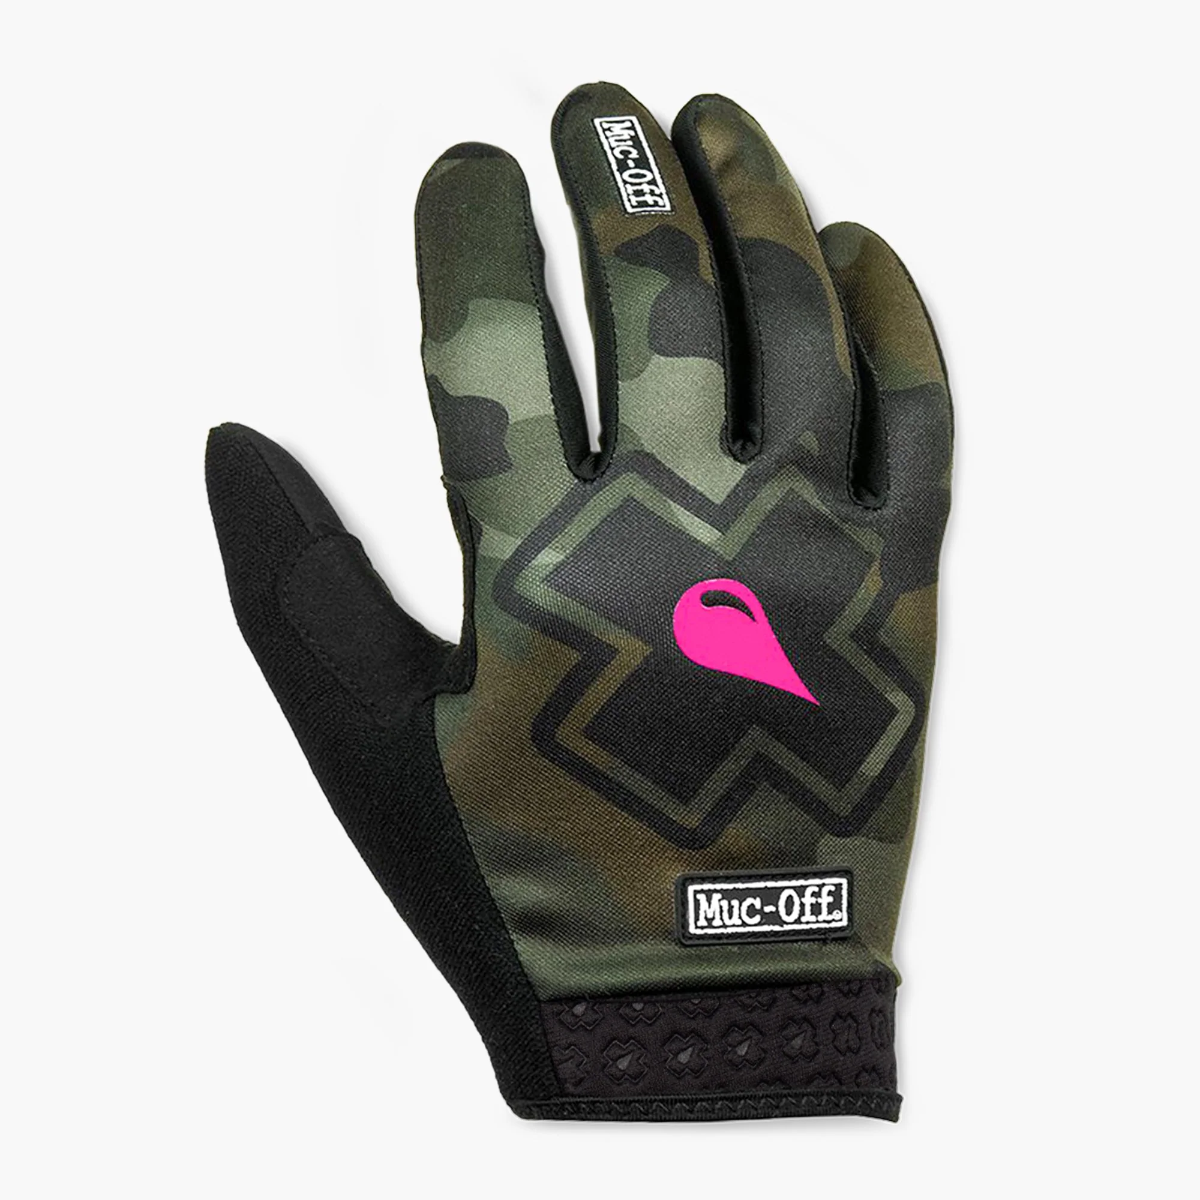 Cimdi Muc-Off Riders Gloves - Camo